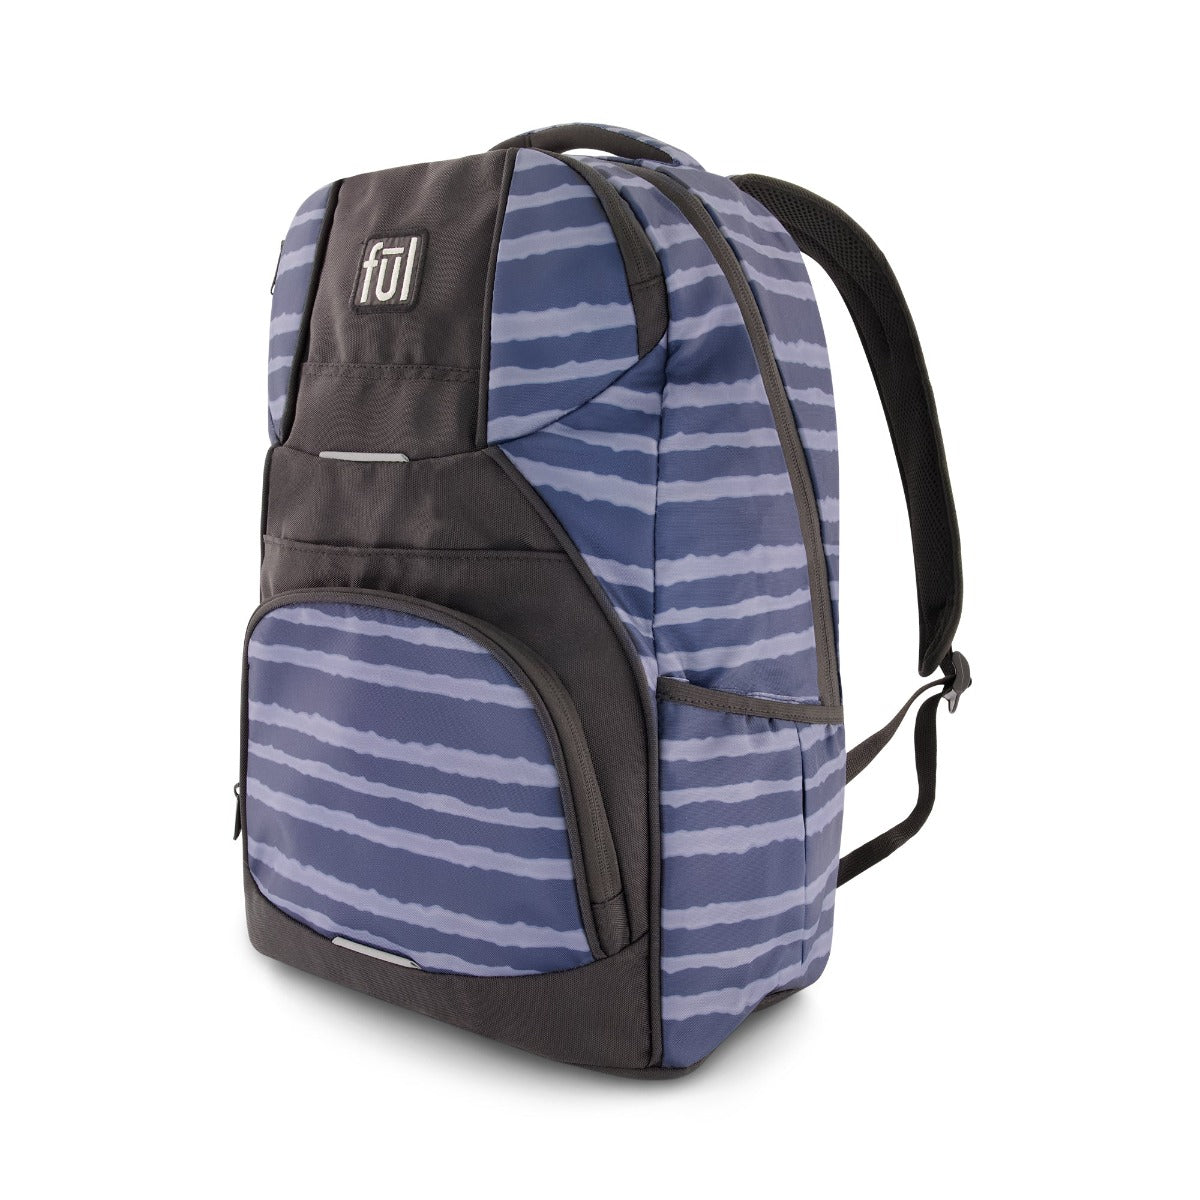 Hudson Laptop FUL Carry-On Backpack Navy Blue Stripe Sale $29.99